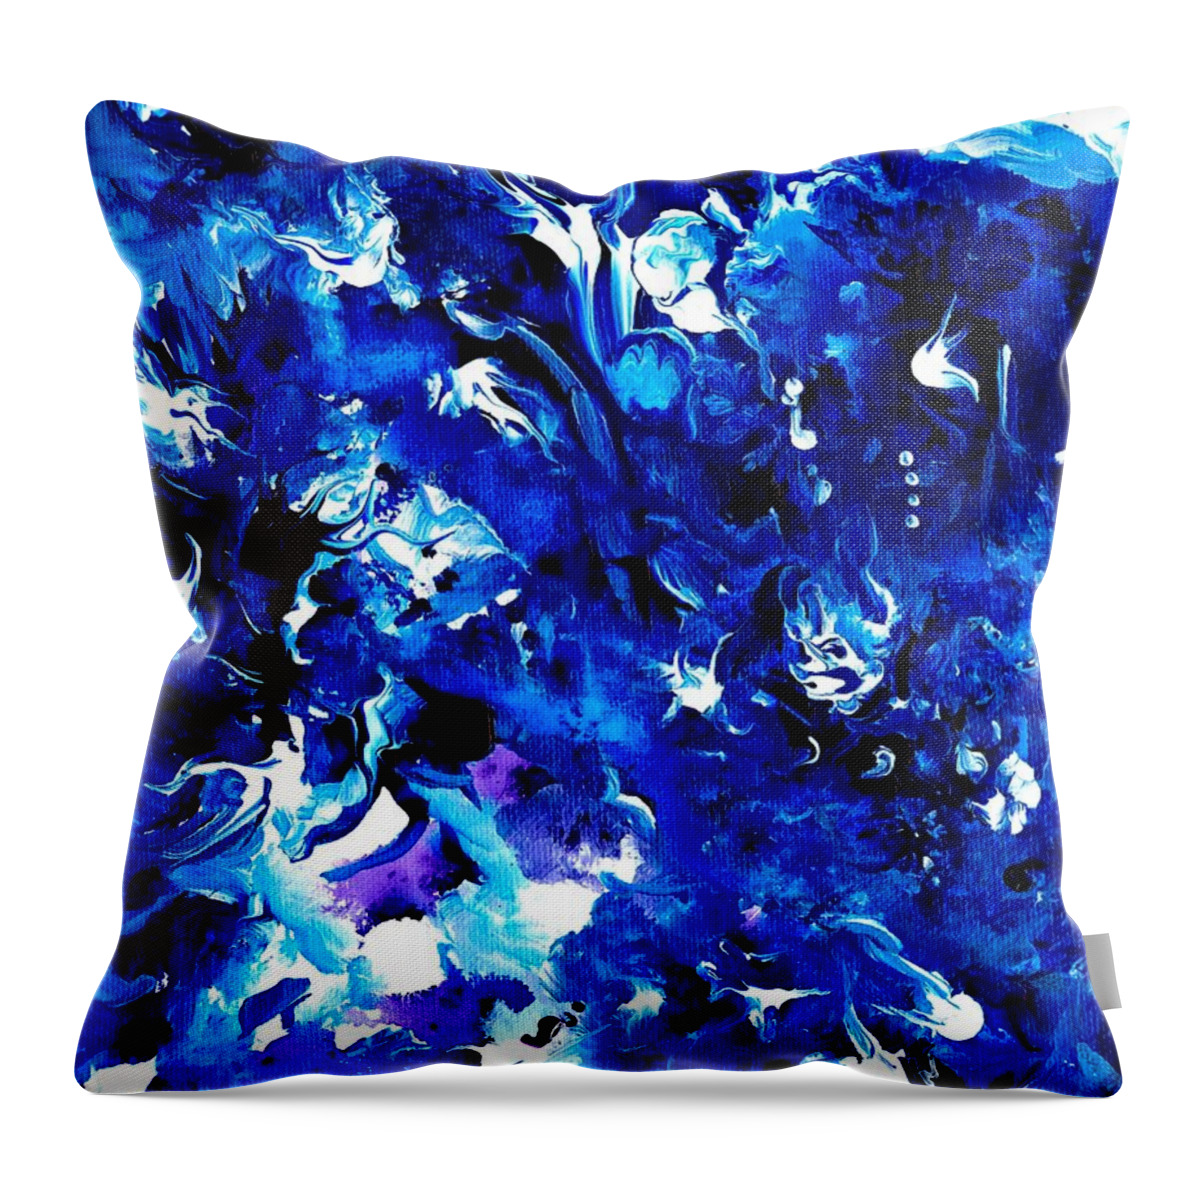 Splash Throw Pillow featuring the digital art Splashed by Jennifer Galbraith